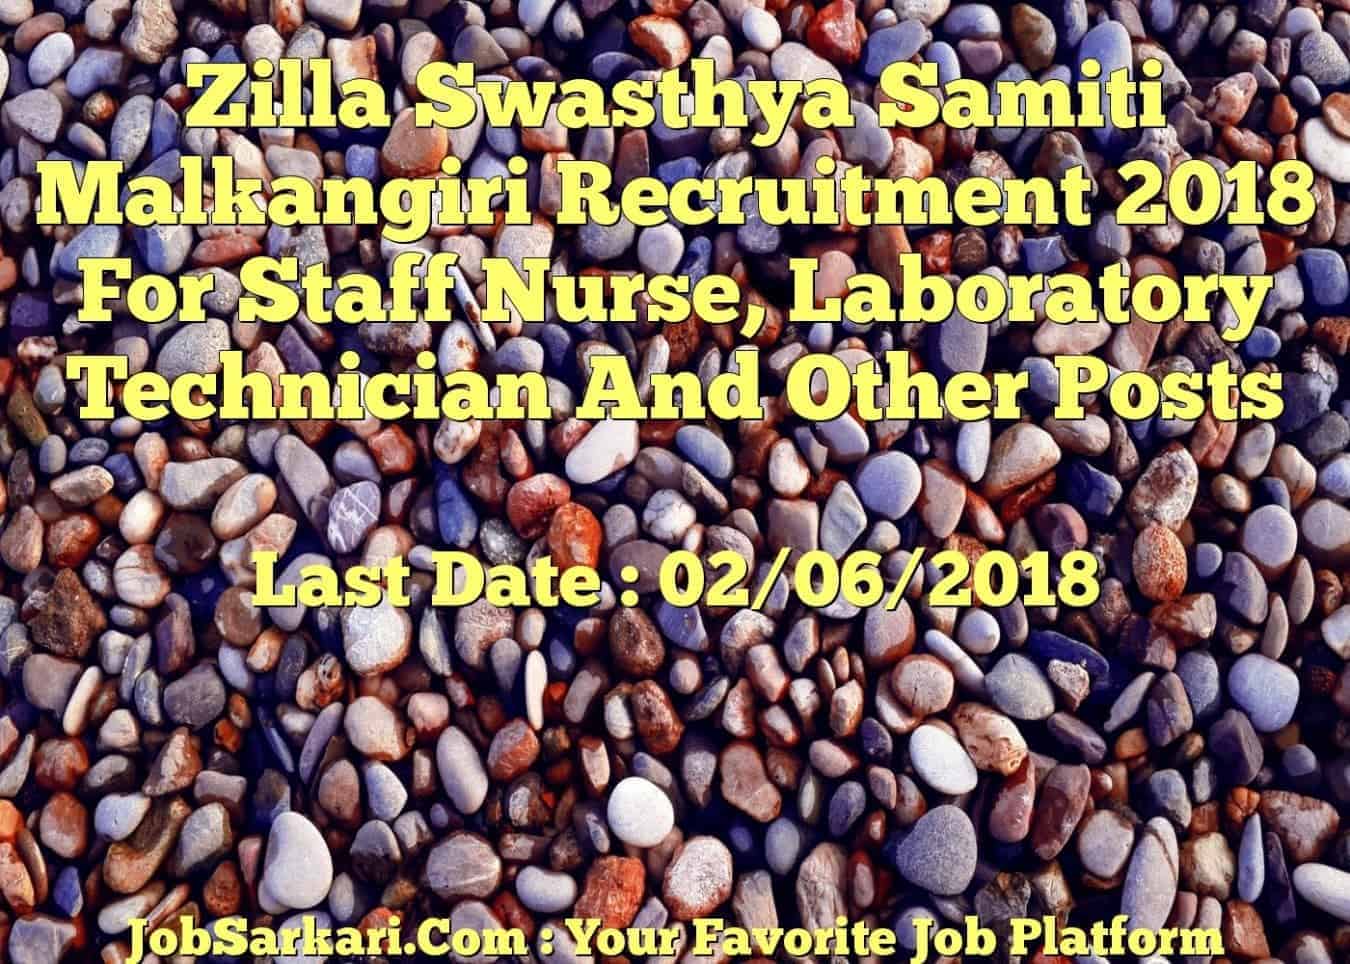 Zilla Swasthya Samiti Malkangiri Recruitment 2018 For Staff Nurse, Laboratory Technician And Other Posts